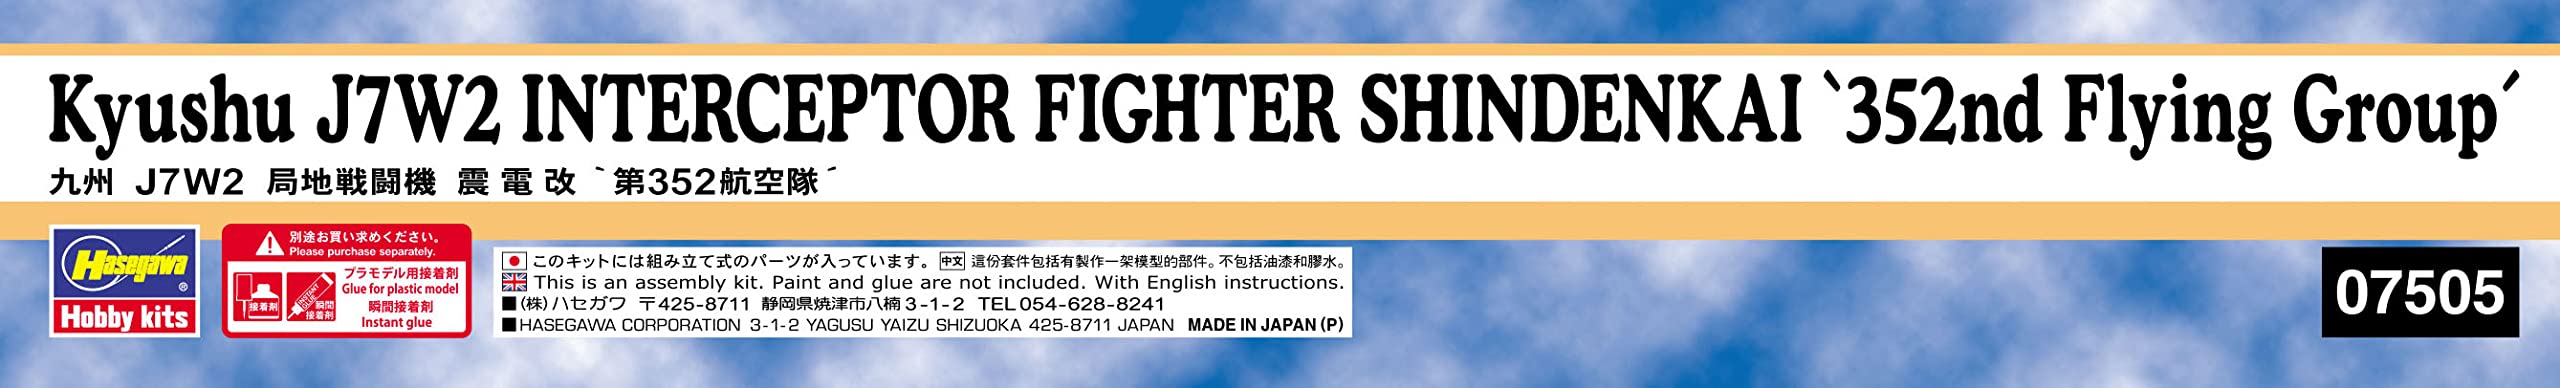 HASEGAWA 1/48 Kyushu J7W2 Interceptor Shinden Kai "352nd Flying Corps" modèle en plastique